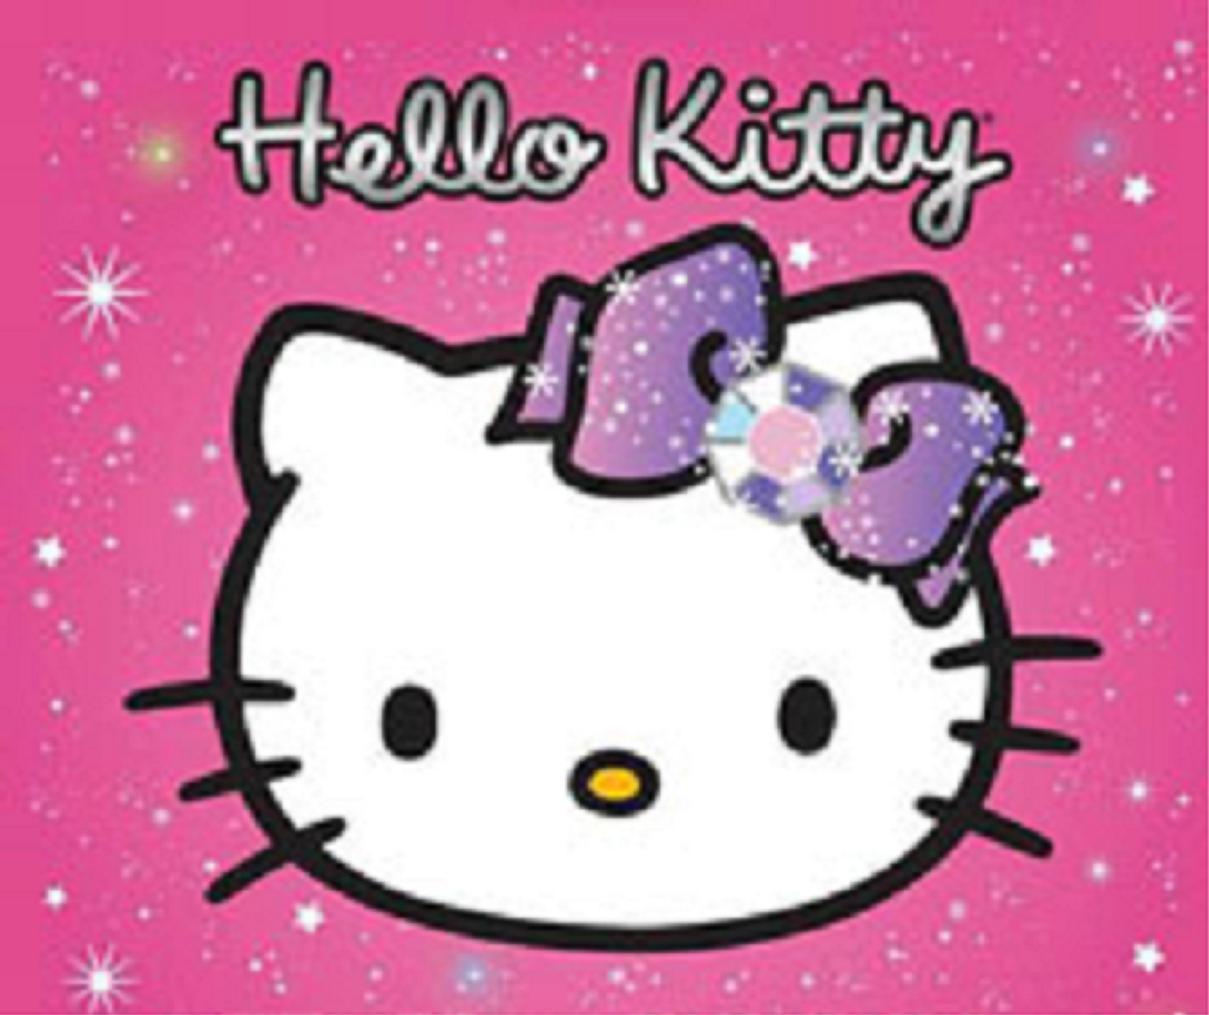 Kitty控們的好福利！Hello Kitty可愛家用電器大集合（攪拌器，吸塵器，水壺，冰淇淋機，爆米花機...）最低$19.99 （50%off）包郵